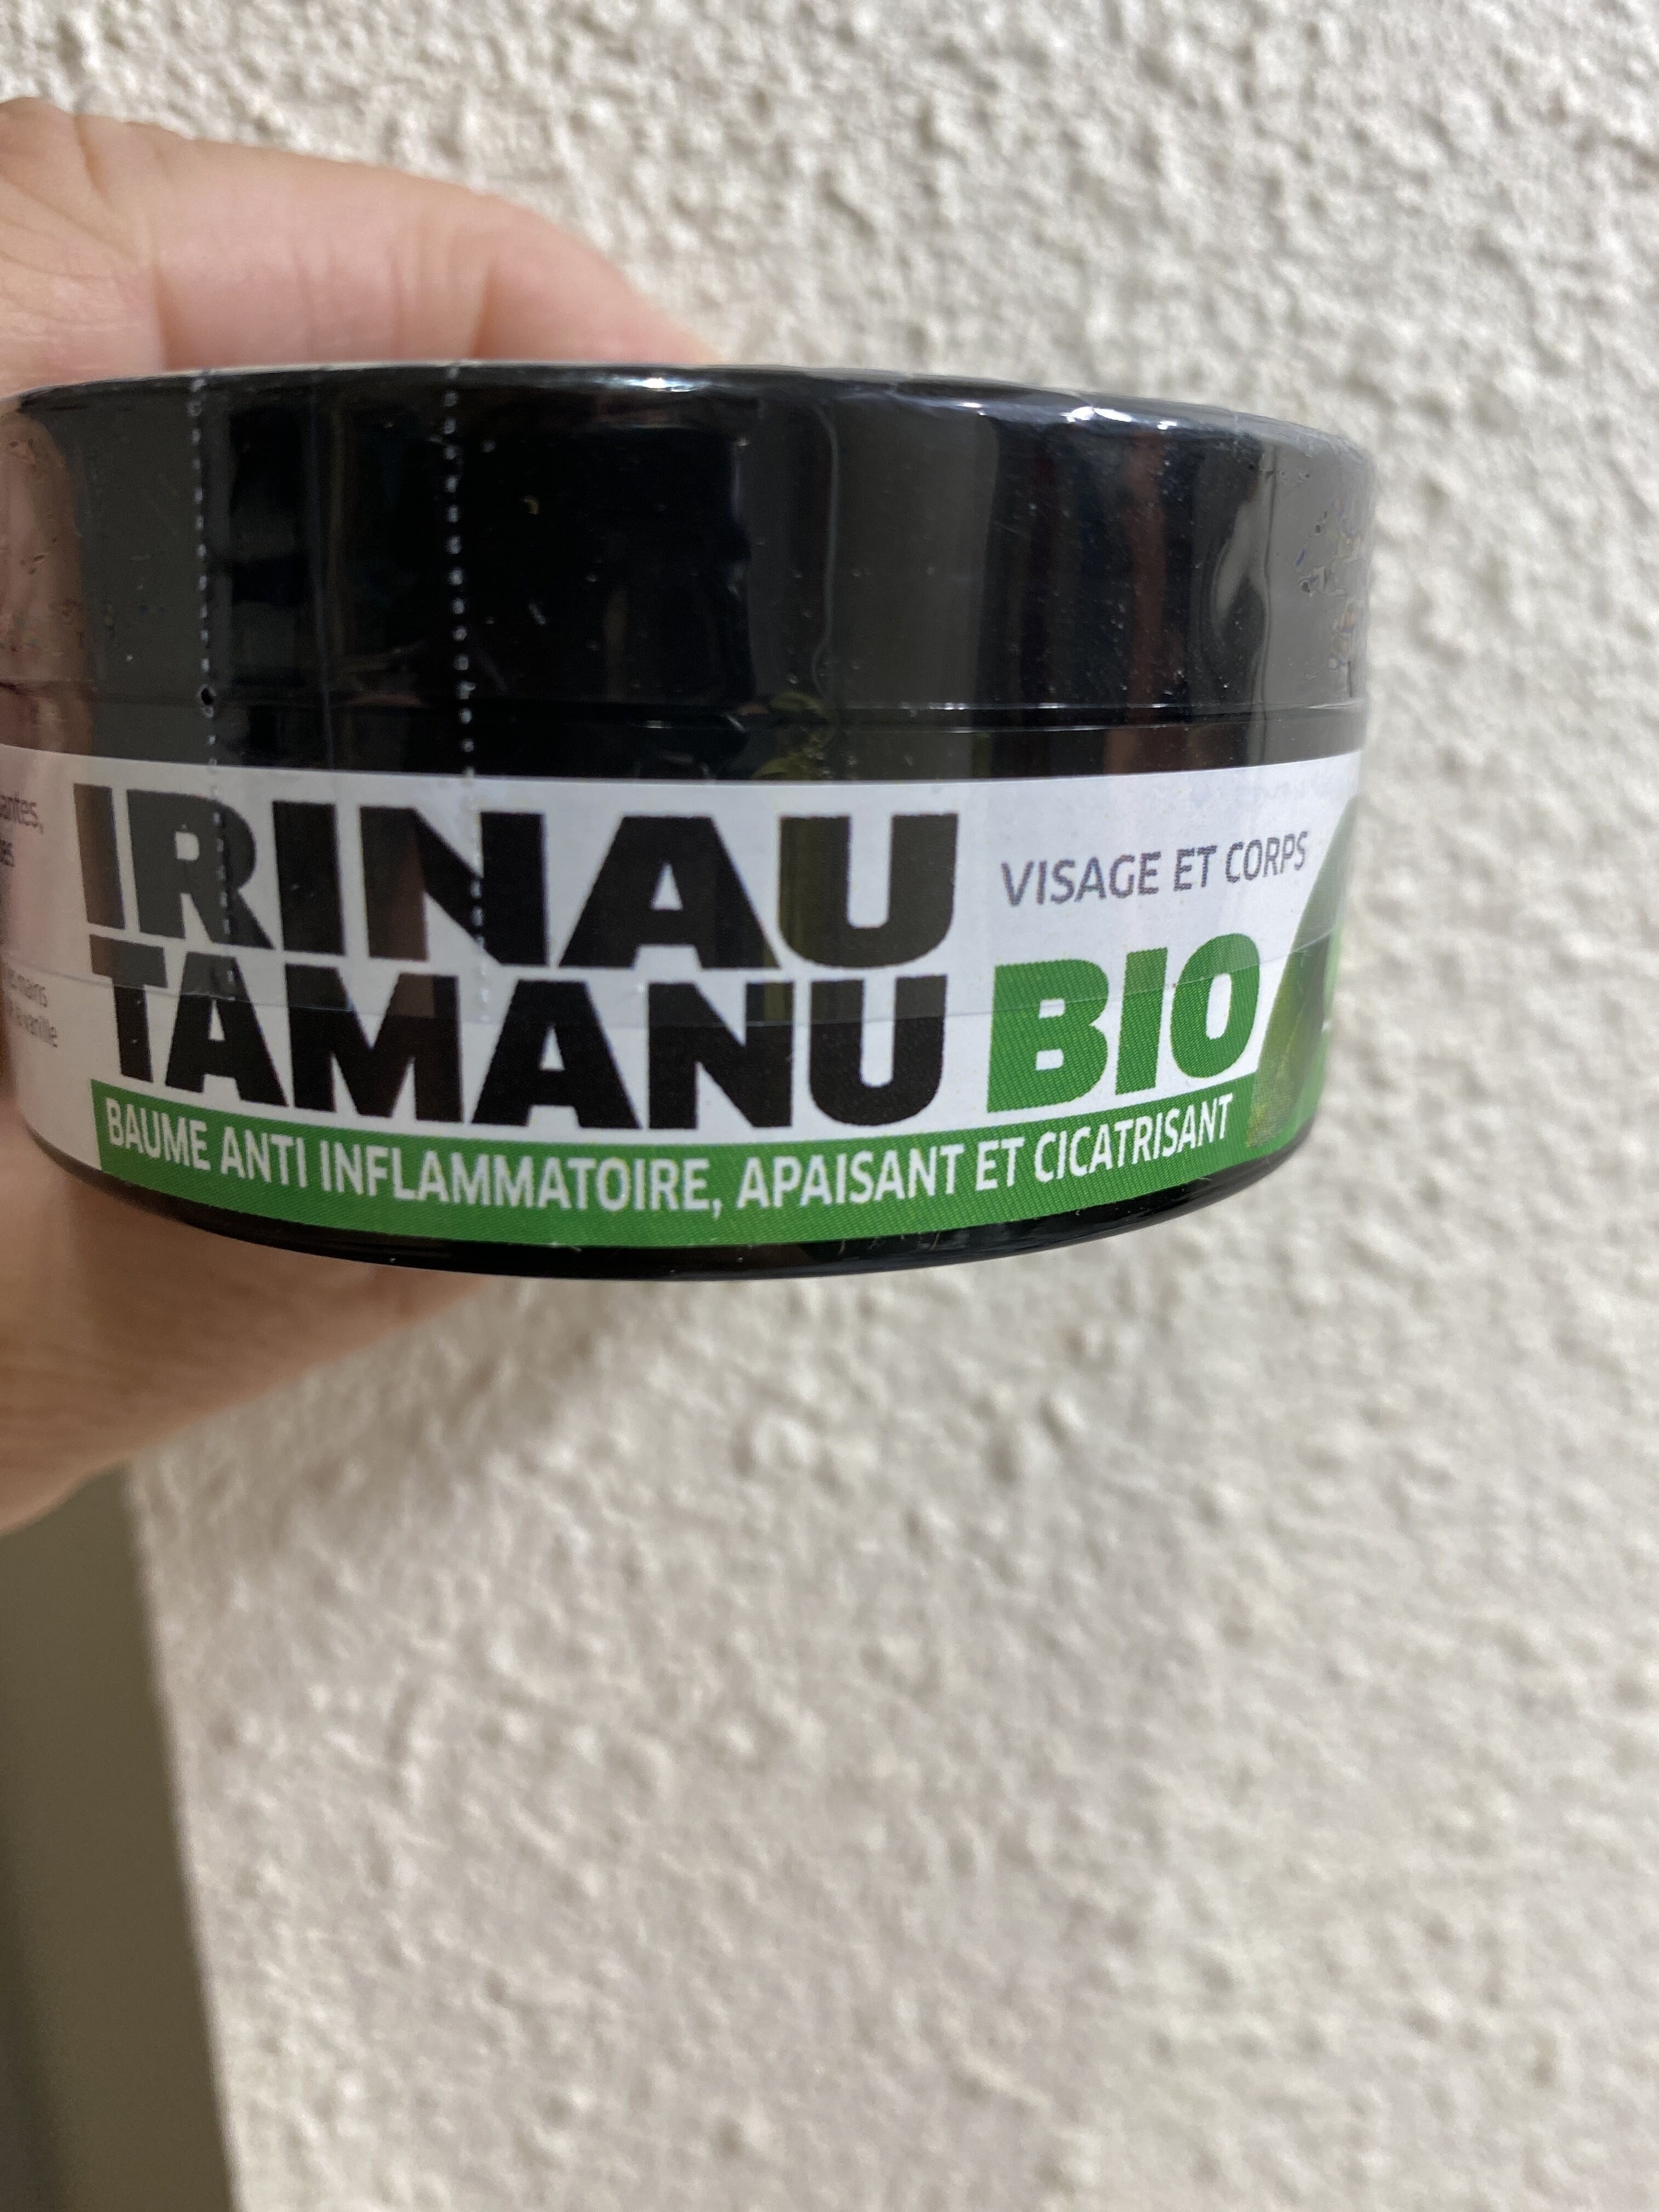 IRINAU TAMANU BIO - Product - fr